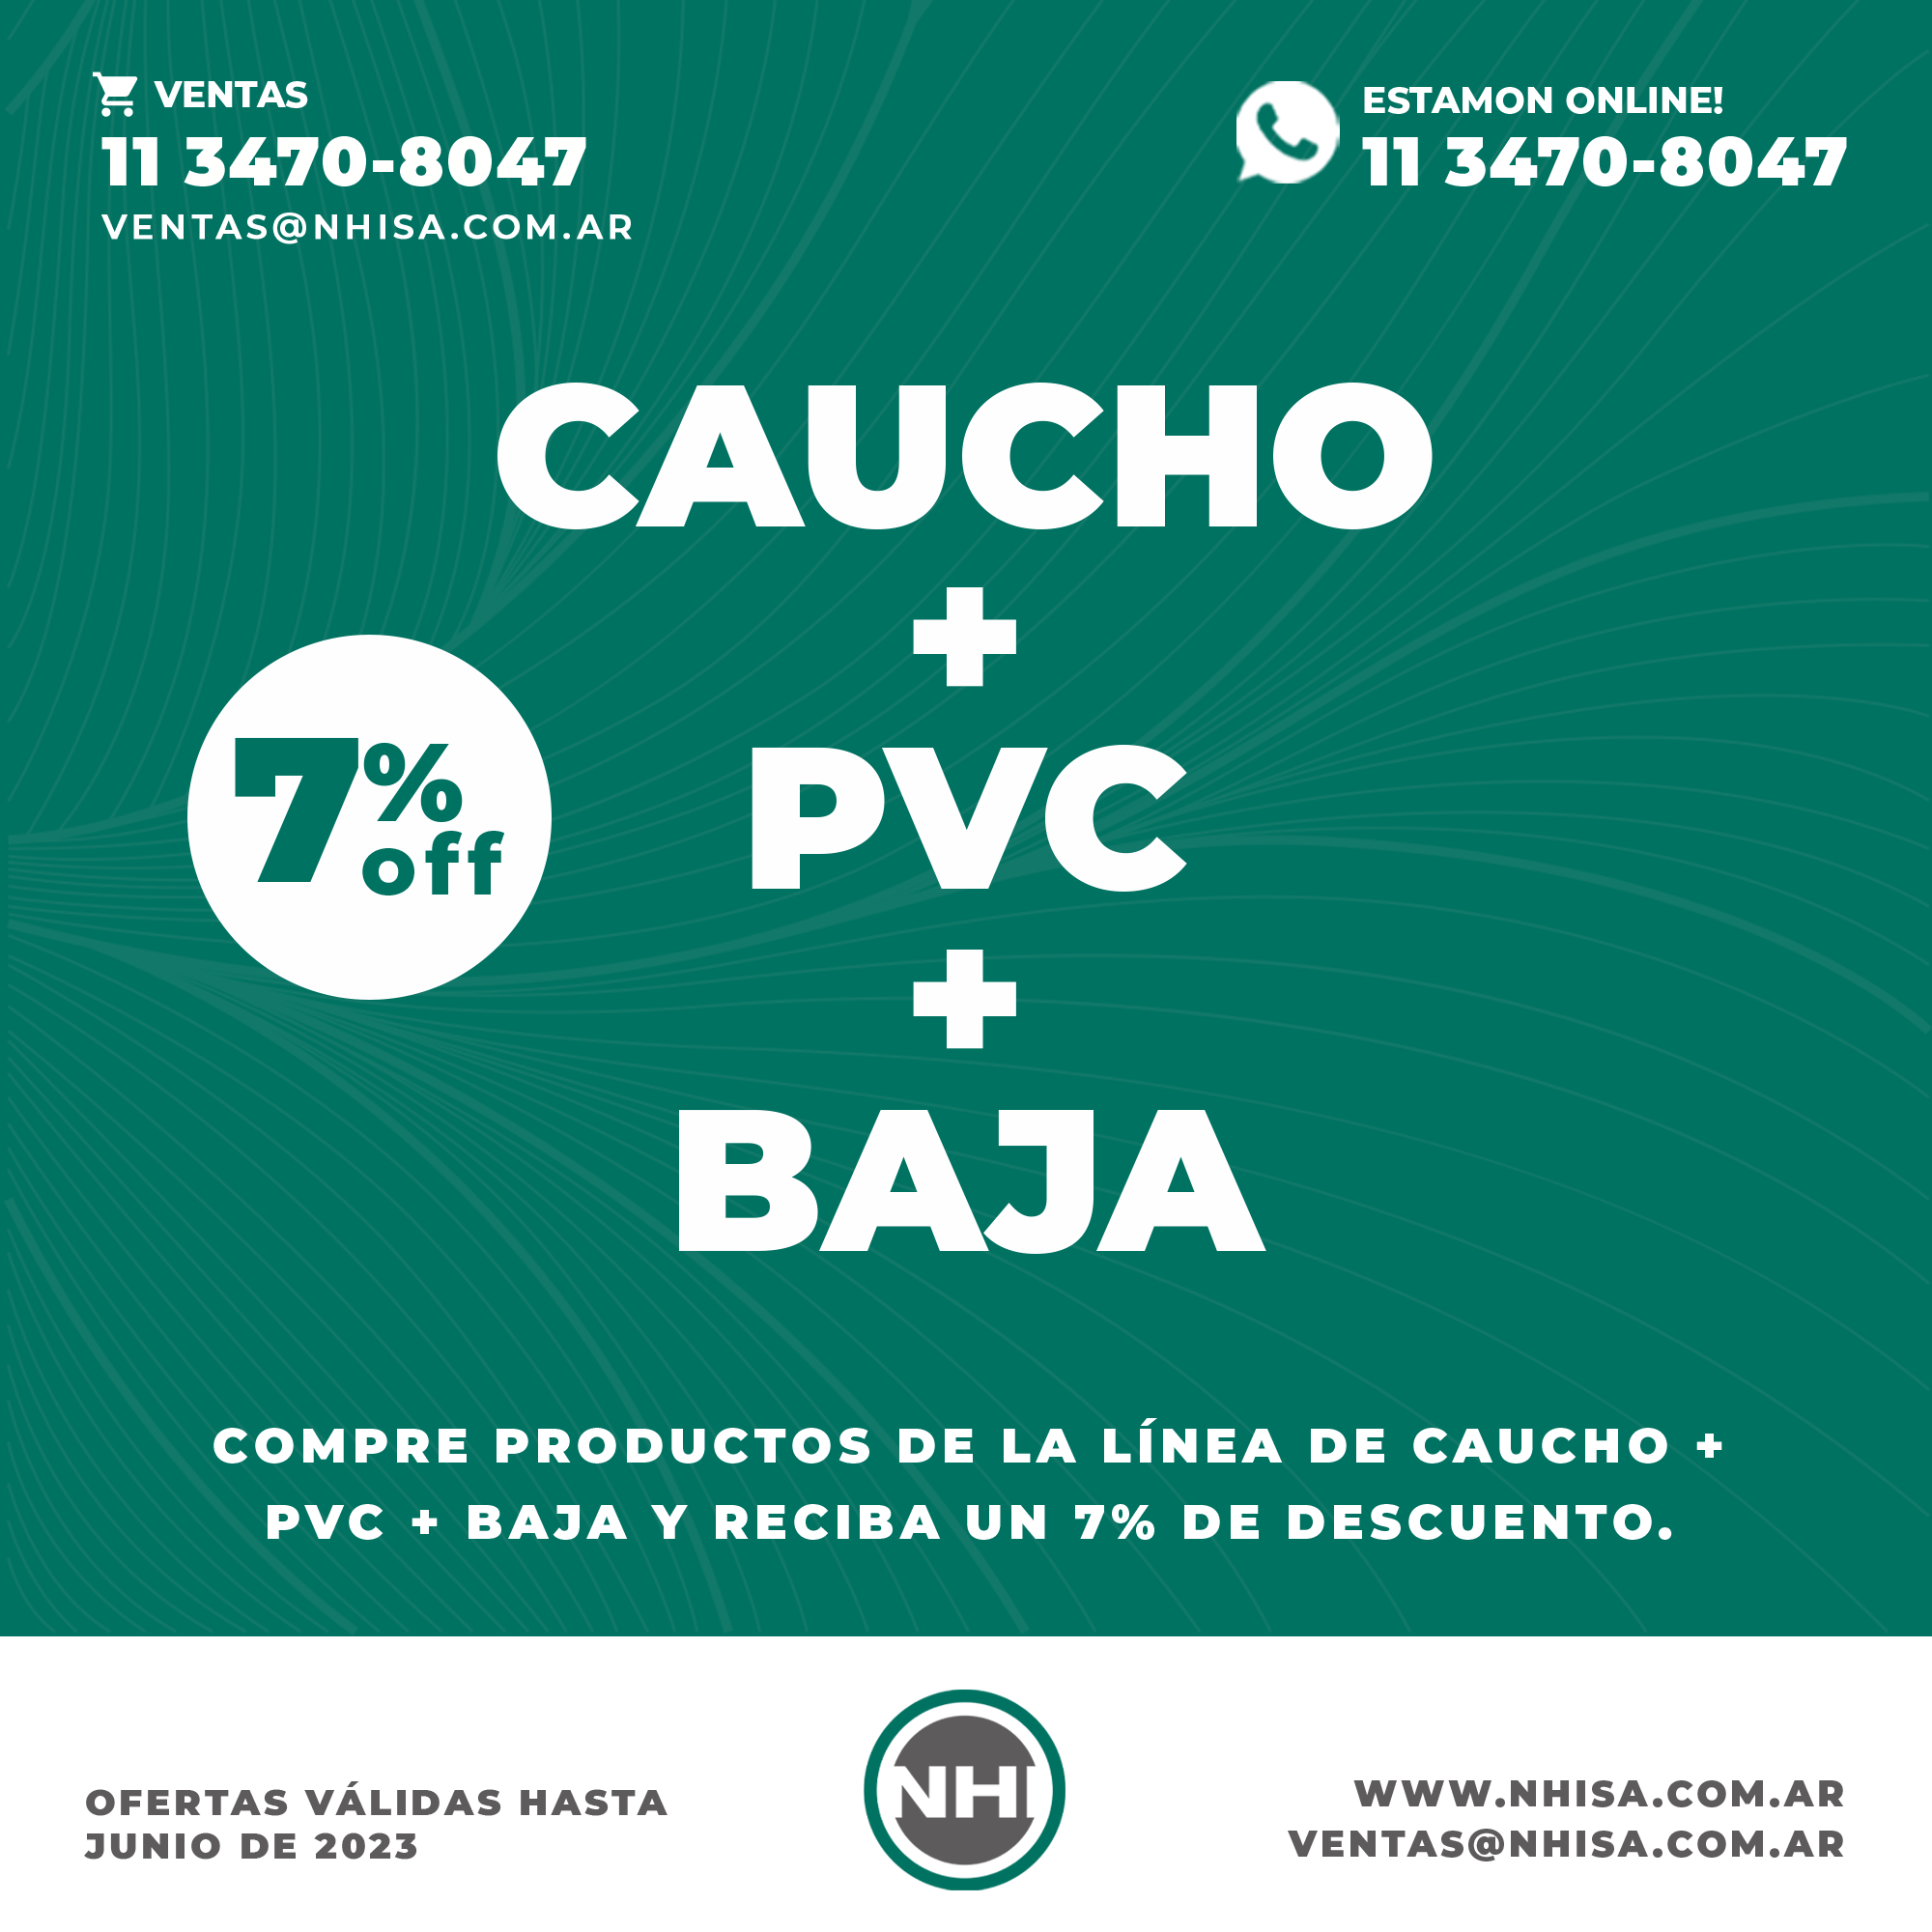 Caucho + PVC + Baja - Oferta